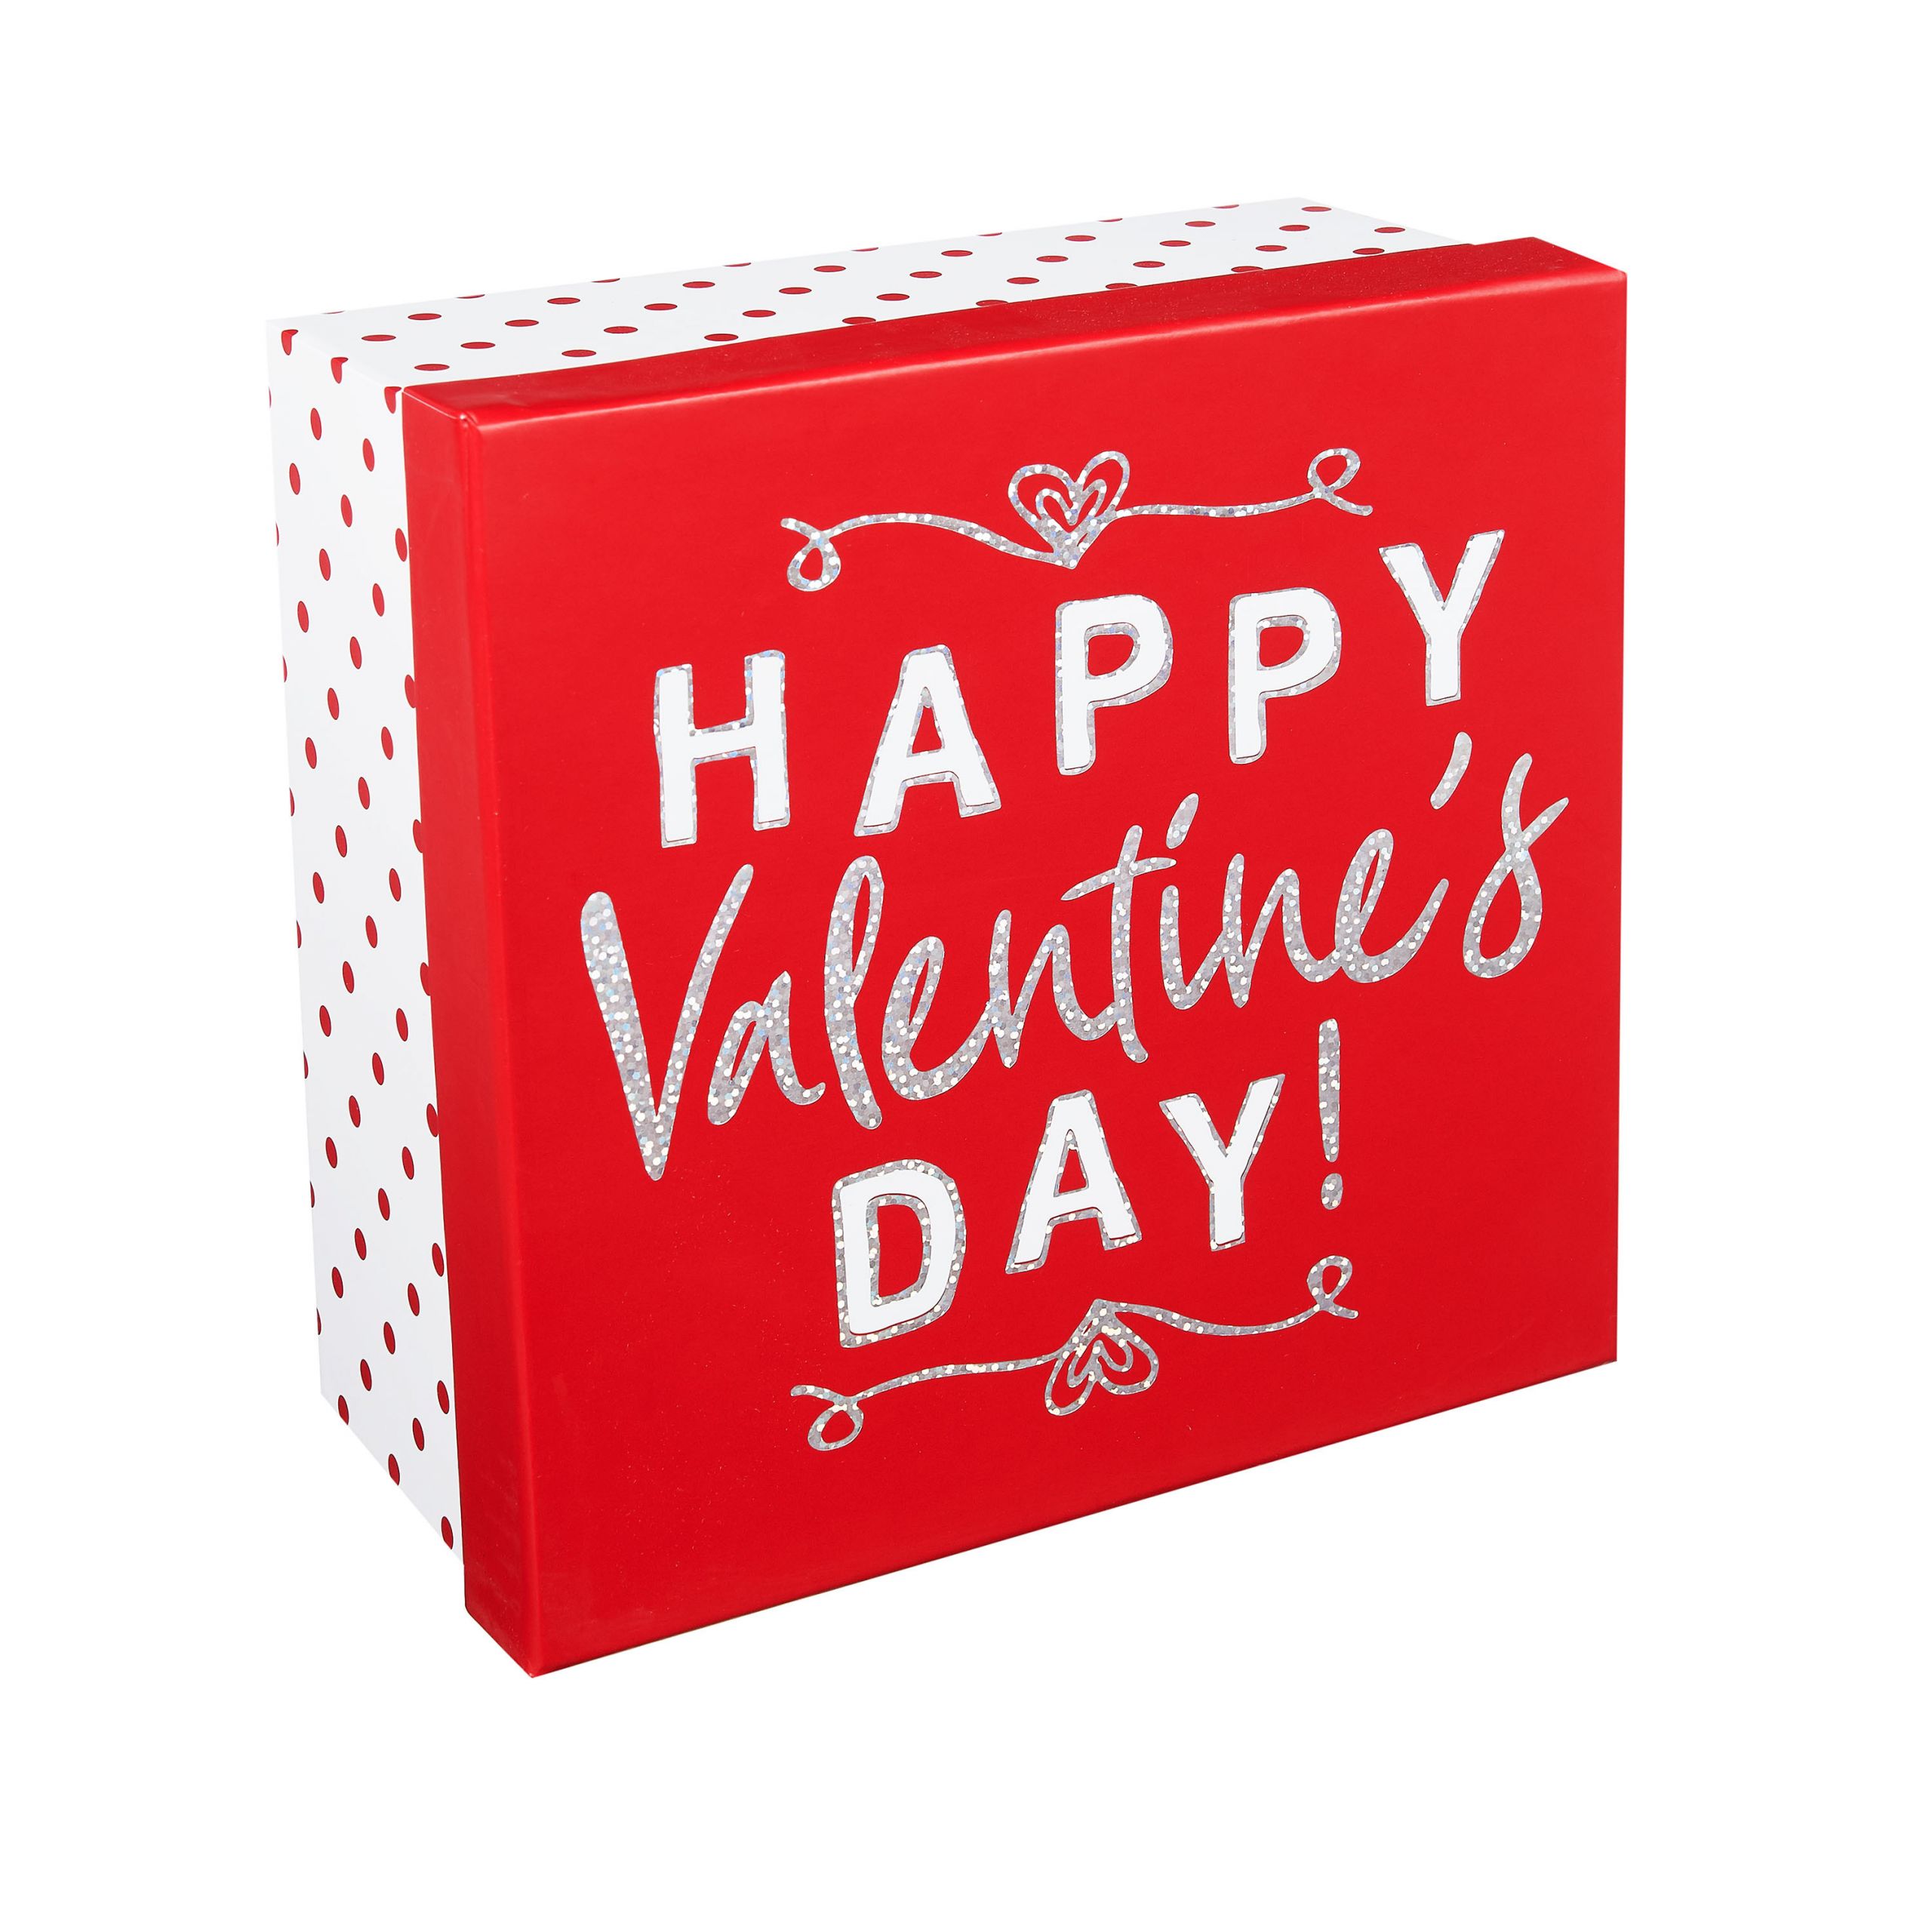 Valentines Day Gift Box
 Way To Celebrate Valentine s Day Square Gift Box Happy